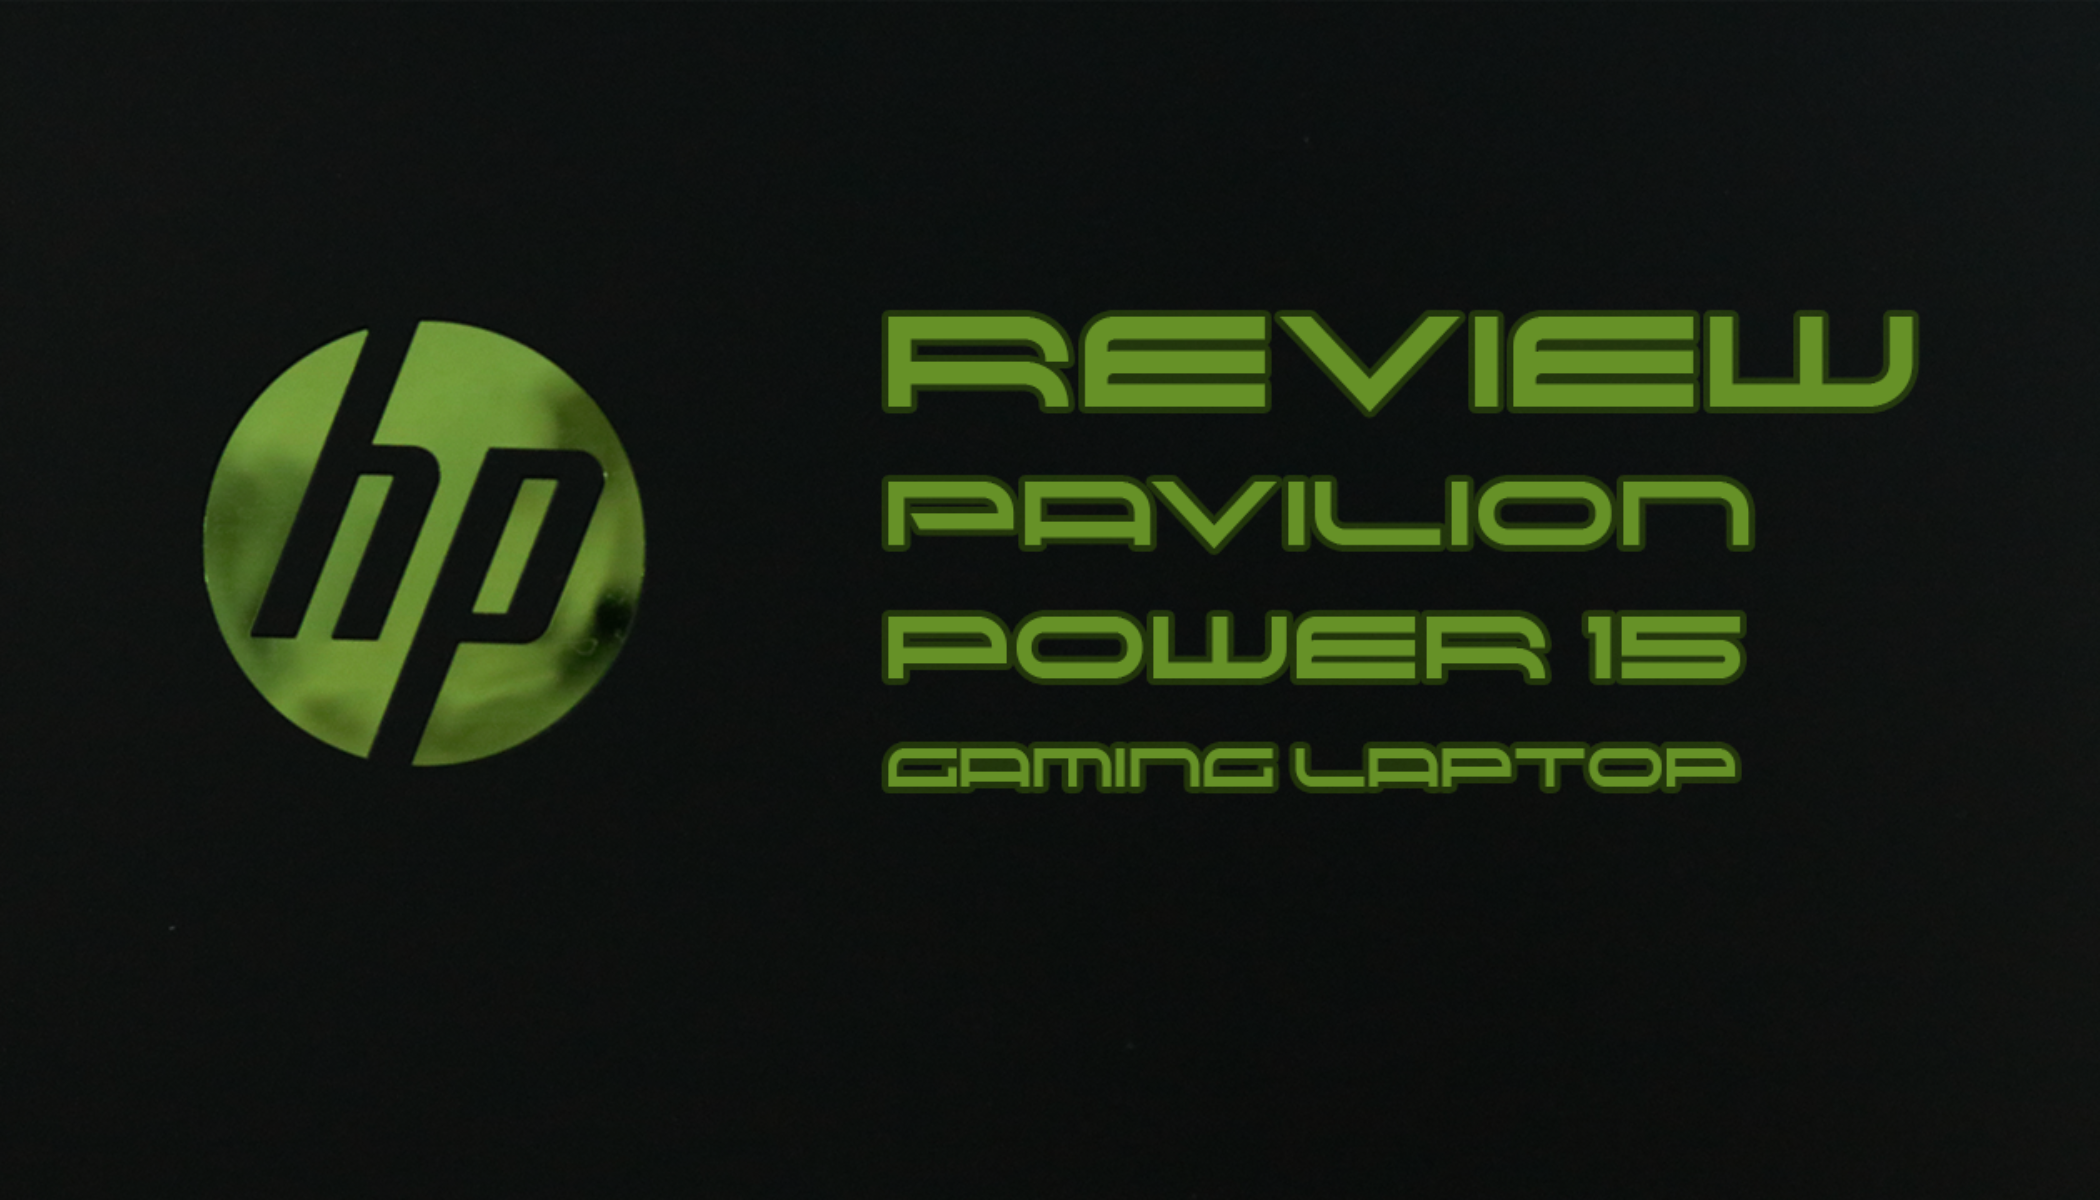 Review: HP Pavilion Power 15 Gaming Laptop